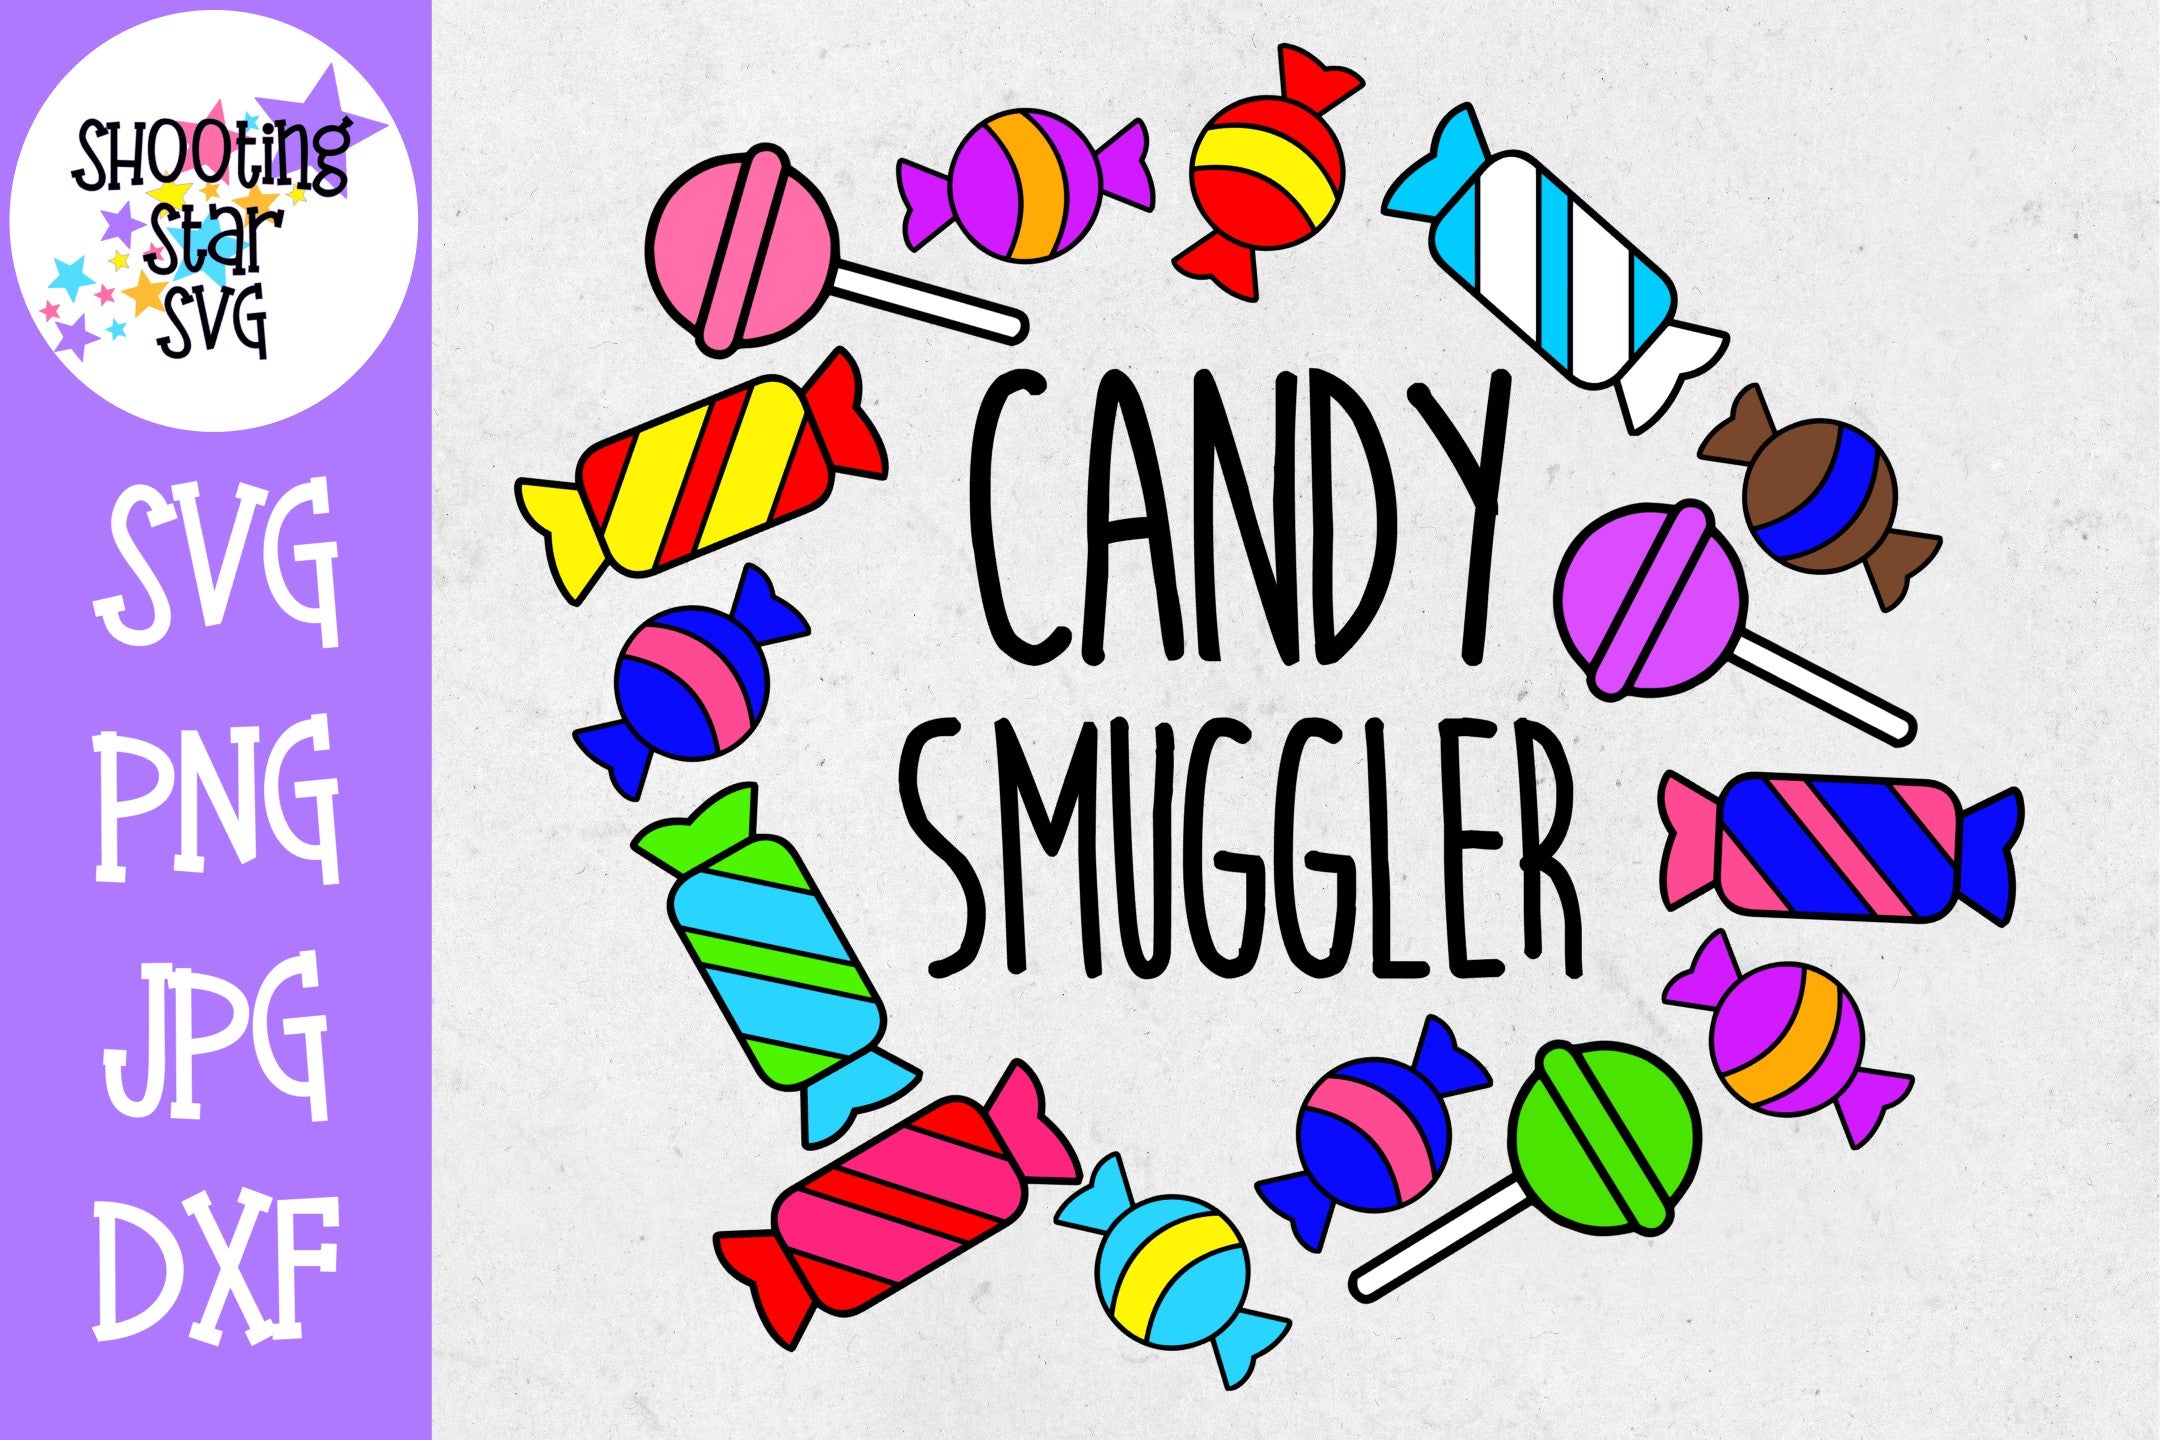 Candy Smuggler - Pregnancy SVG - Maternity SVG